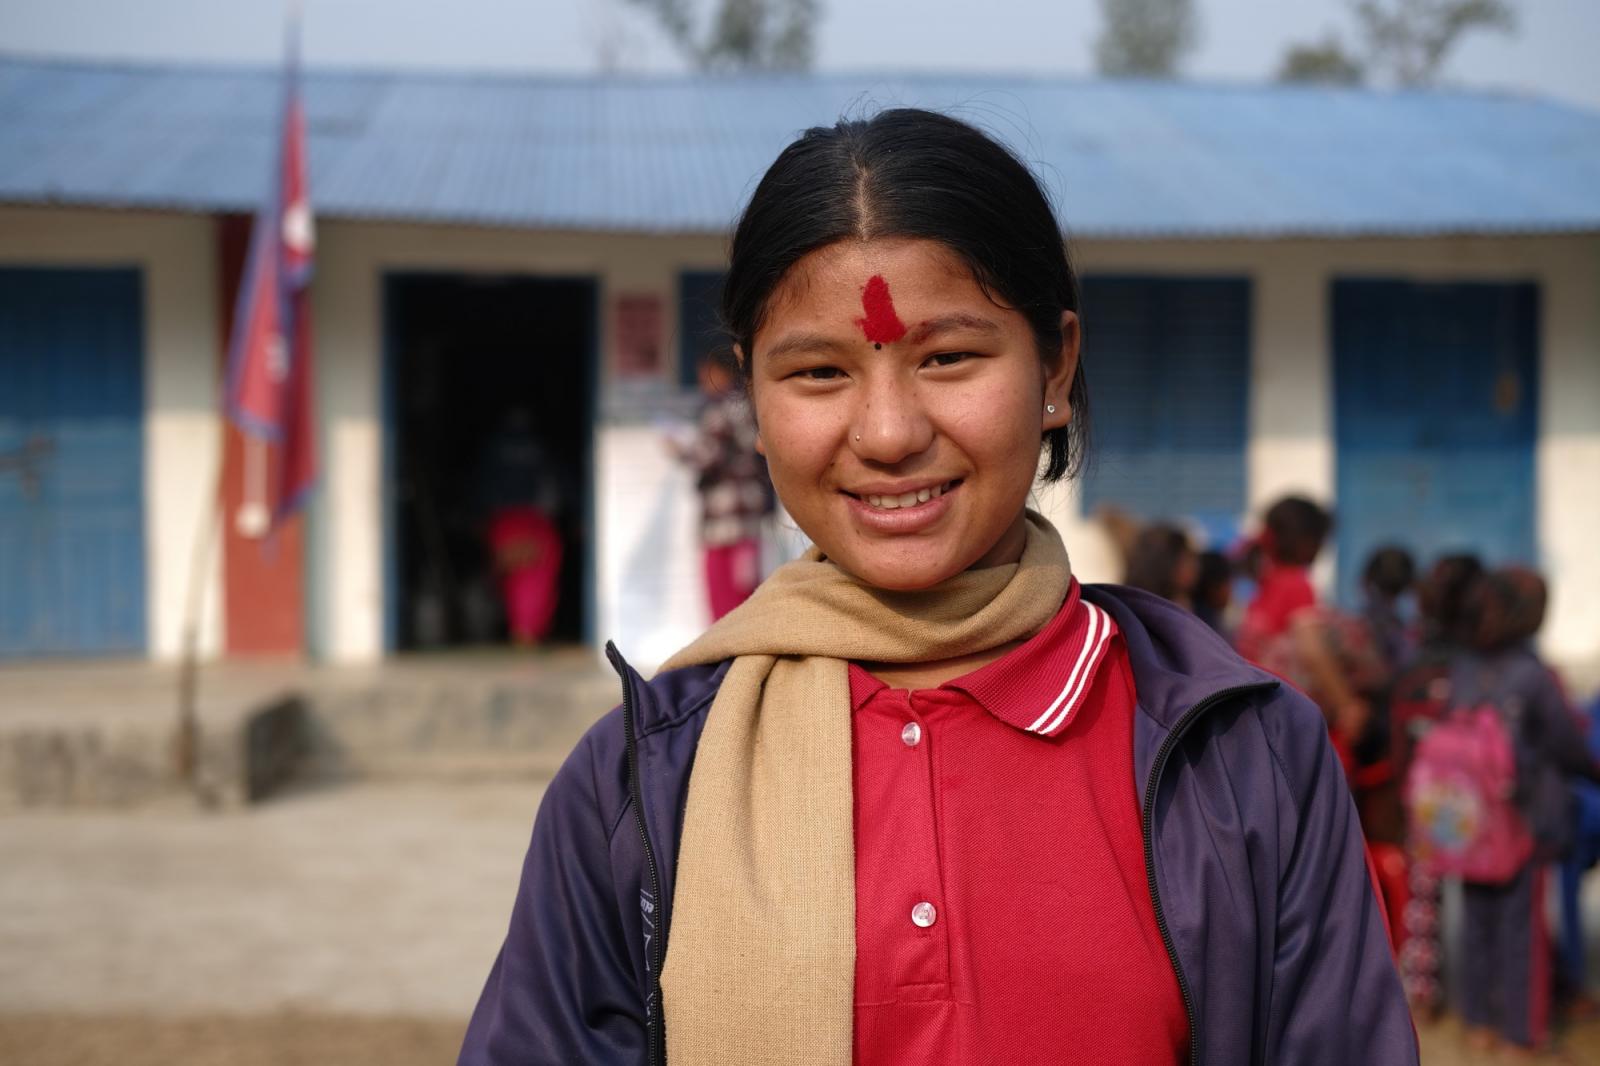 Nepalese girl outside of school